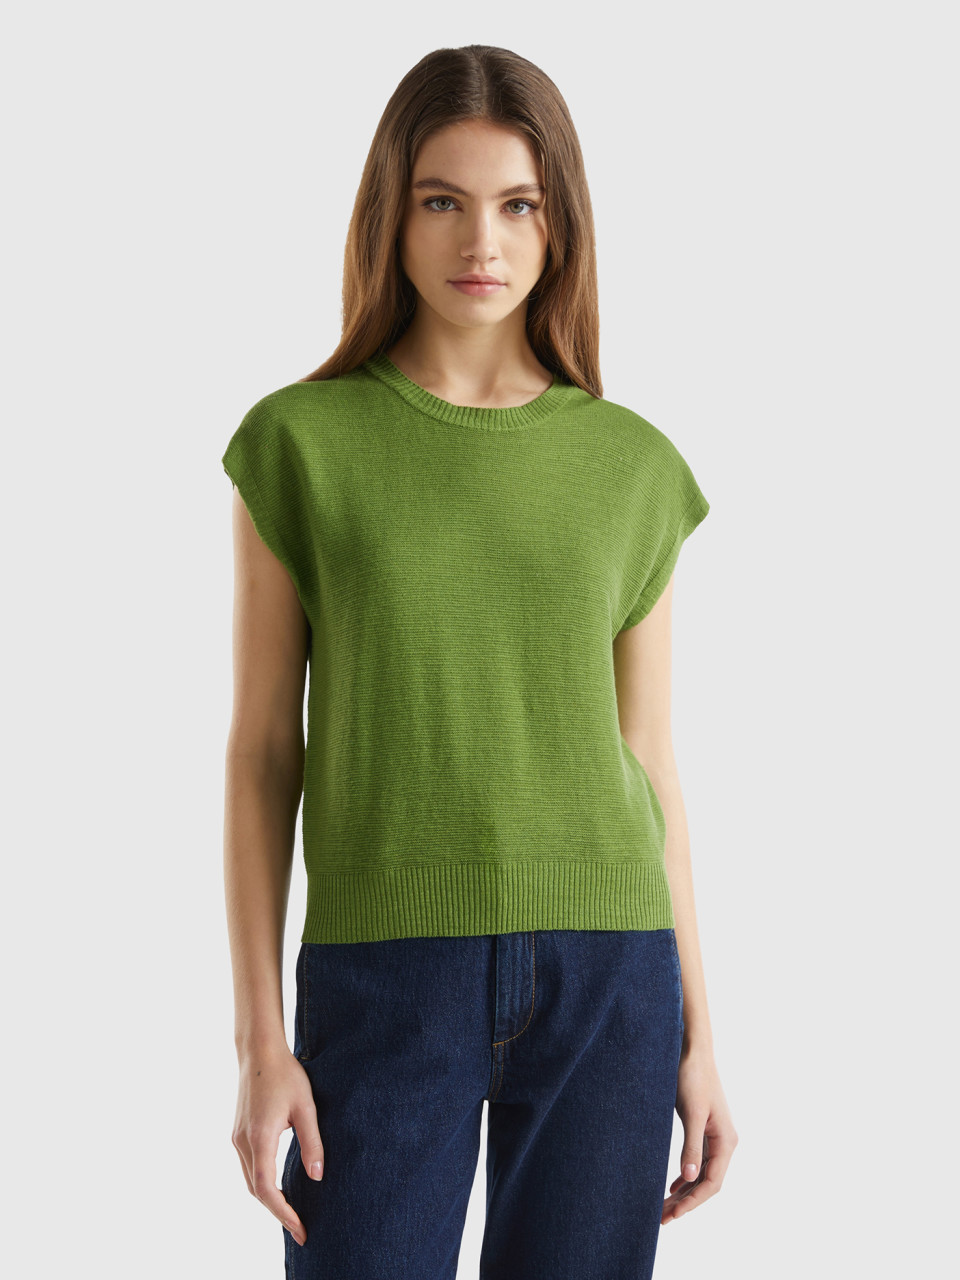 Benetton, Vest In Cotton And Linen Blend, Military Green, Women